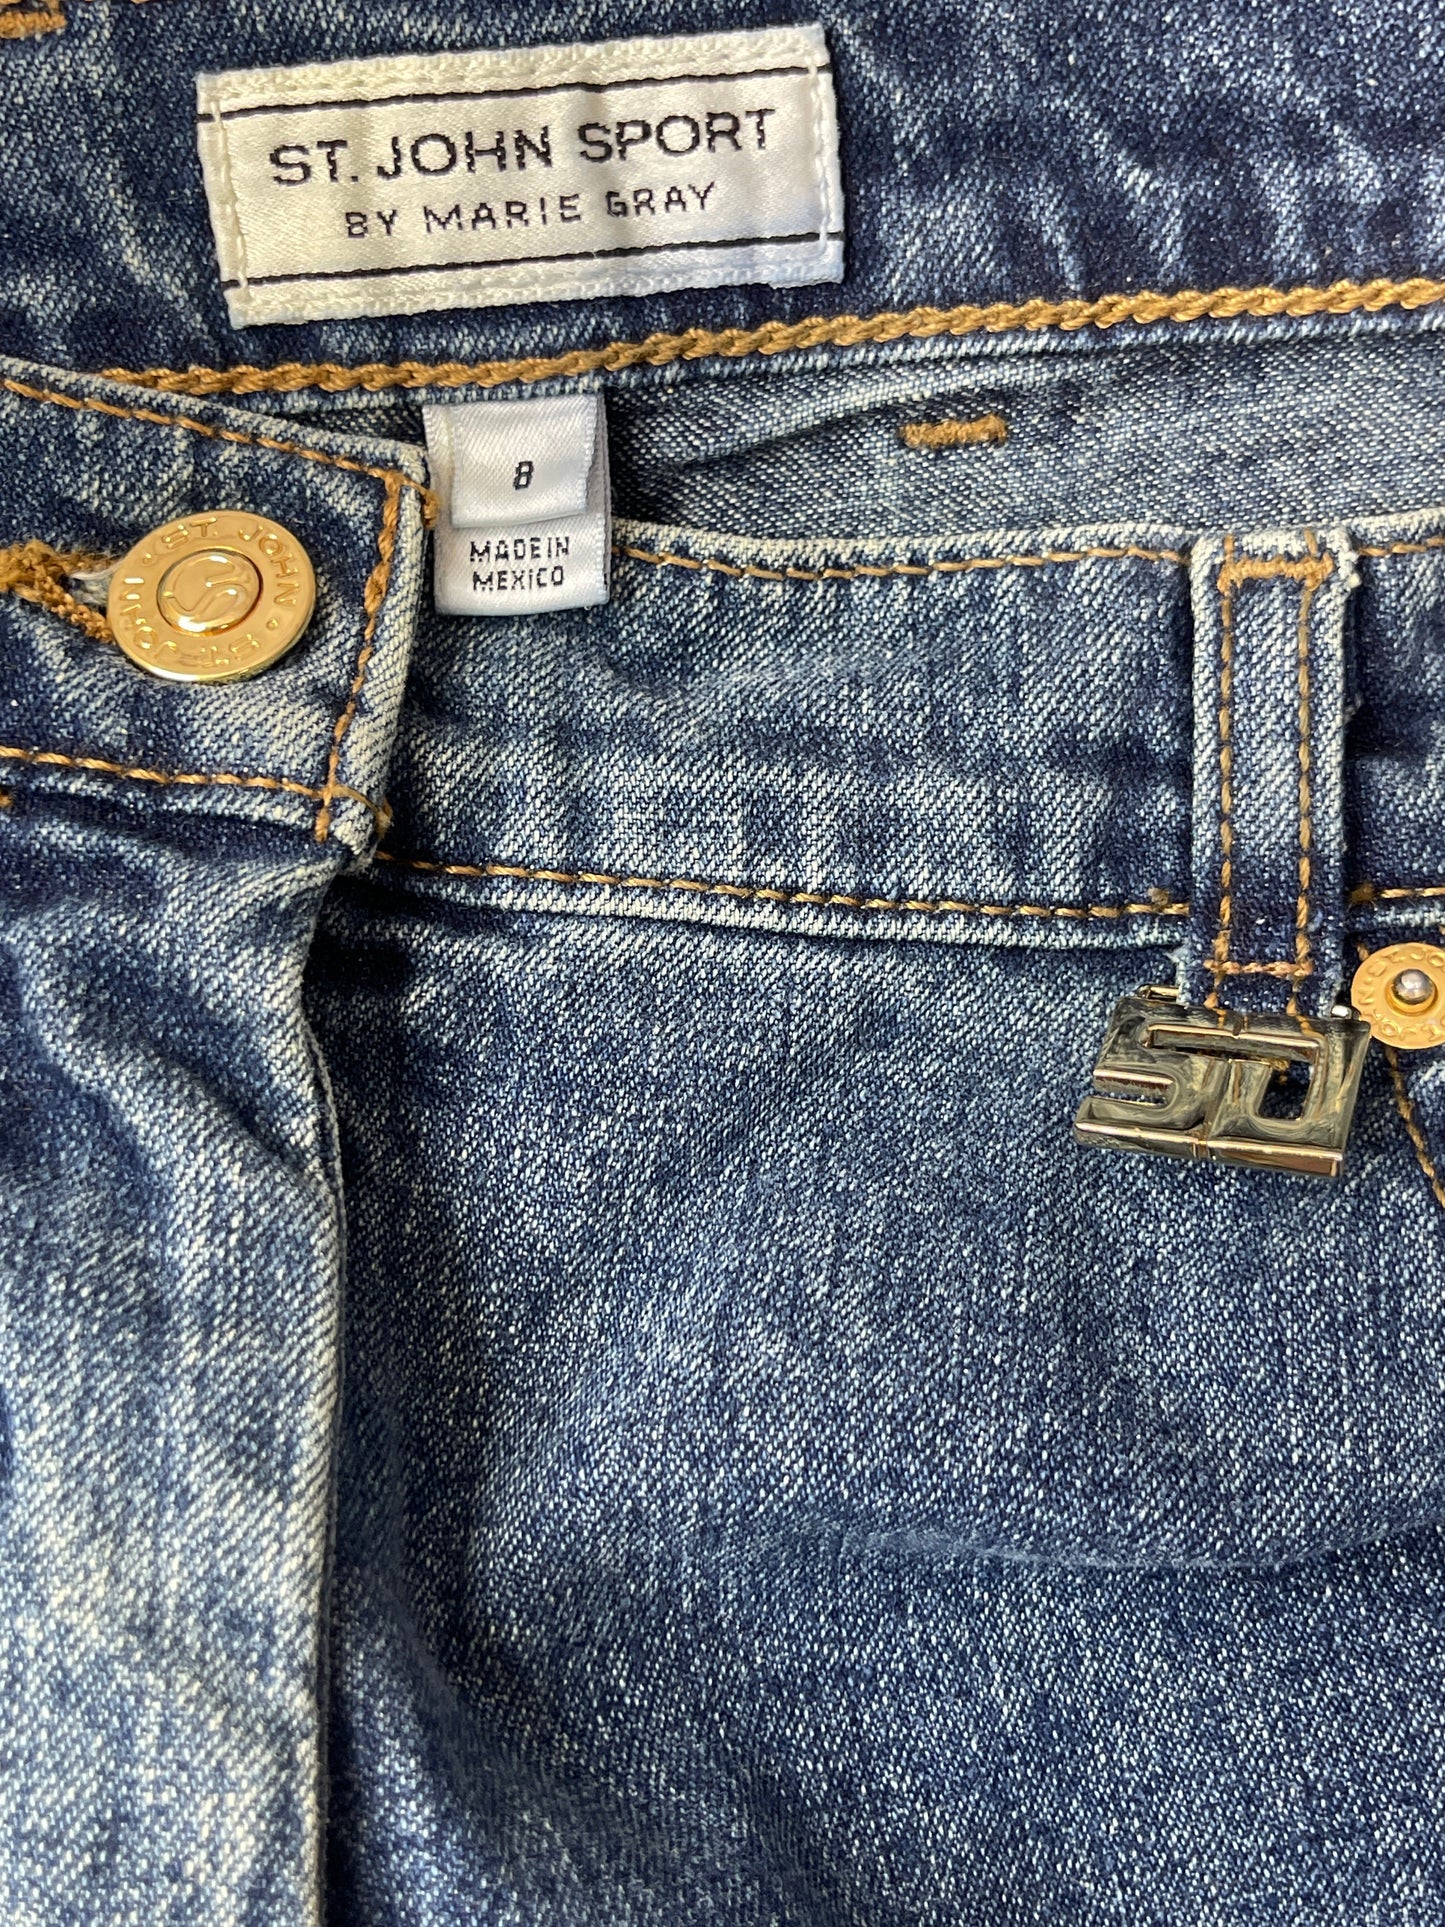 Jeans Designer By St. John  Size: 8